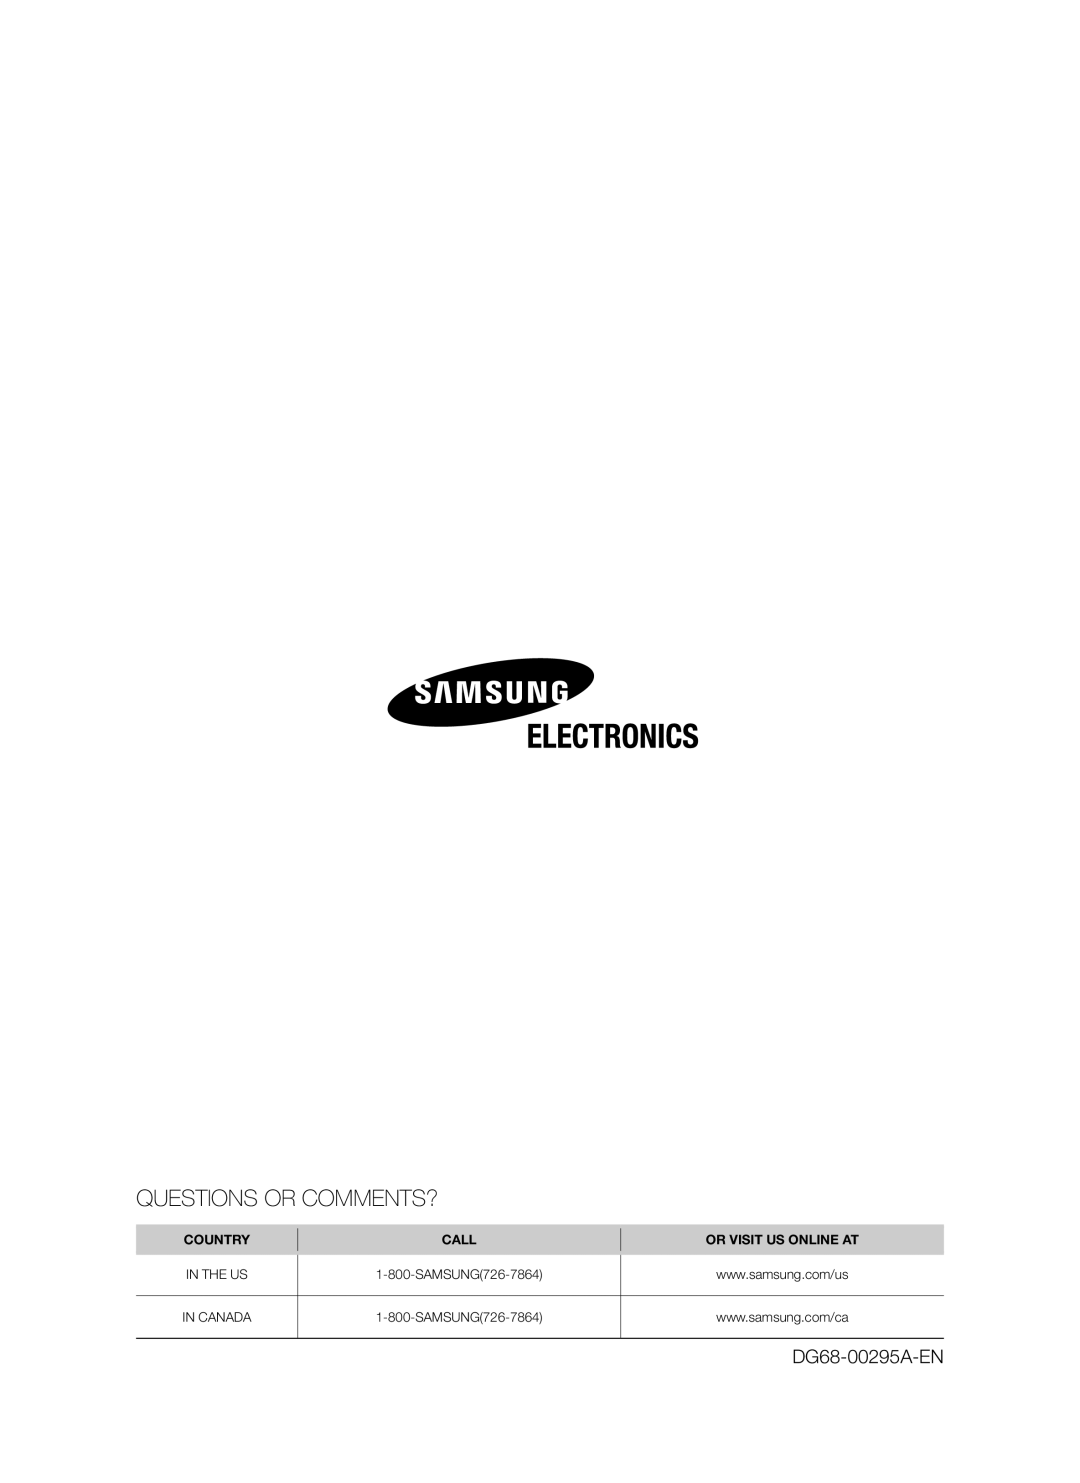 Samsung FE-R500WW user manual DG68-00295A-EN, In The Us, SAMSUNG726-7864, In Canada 